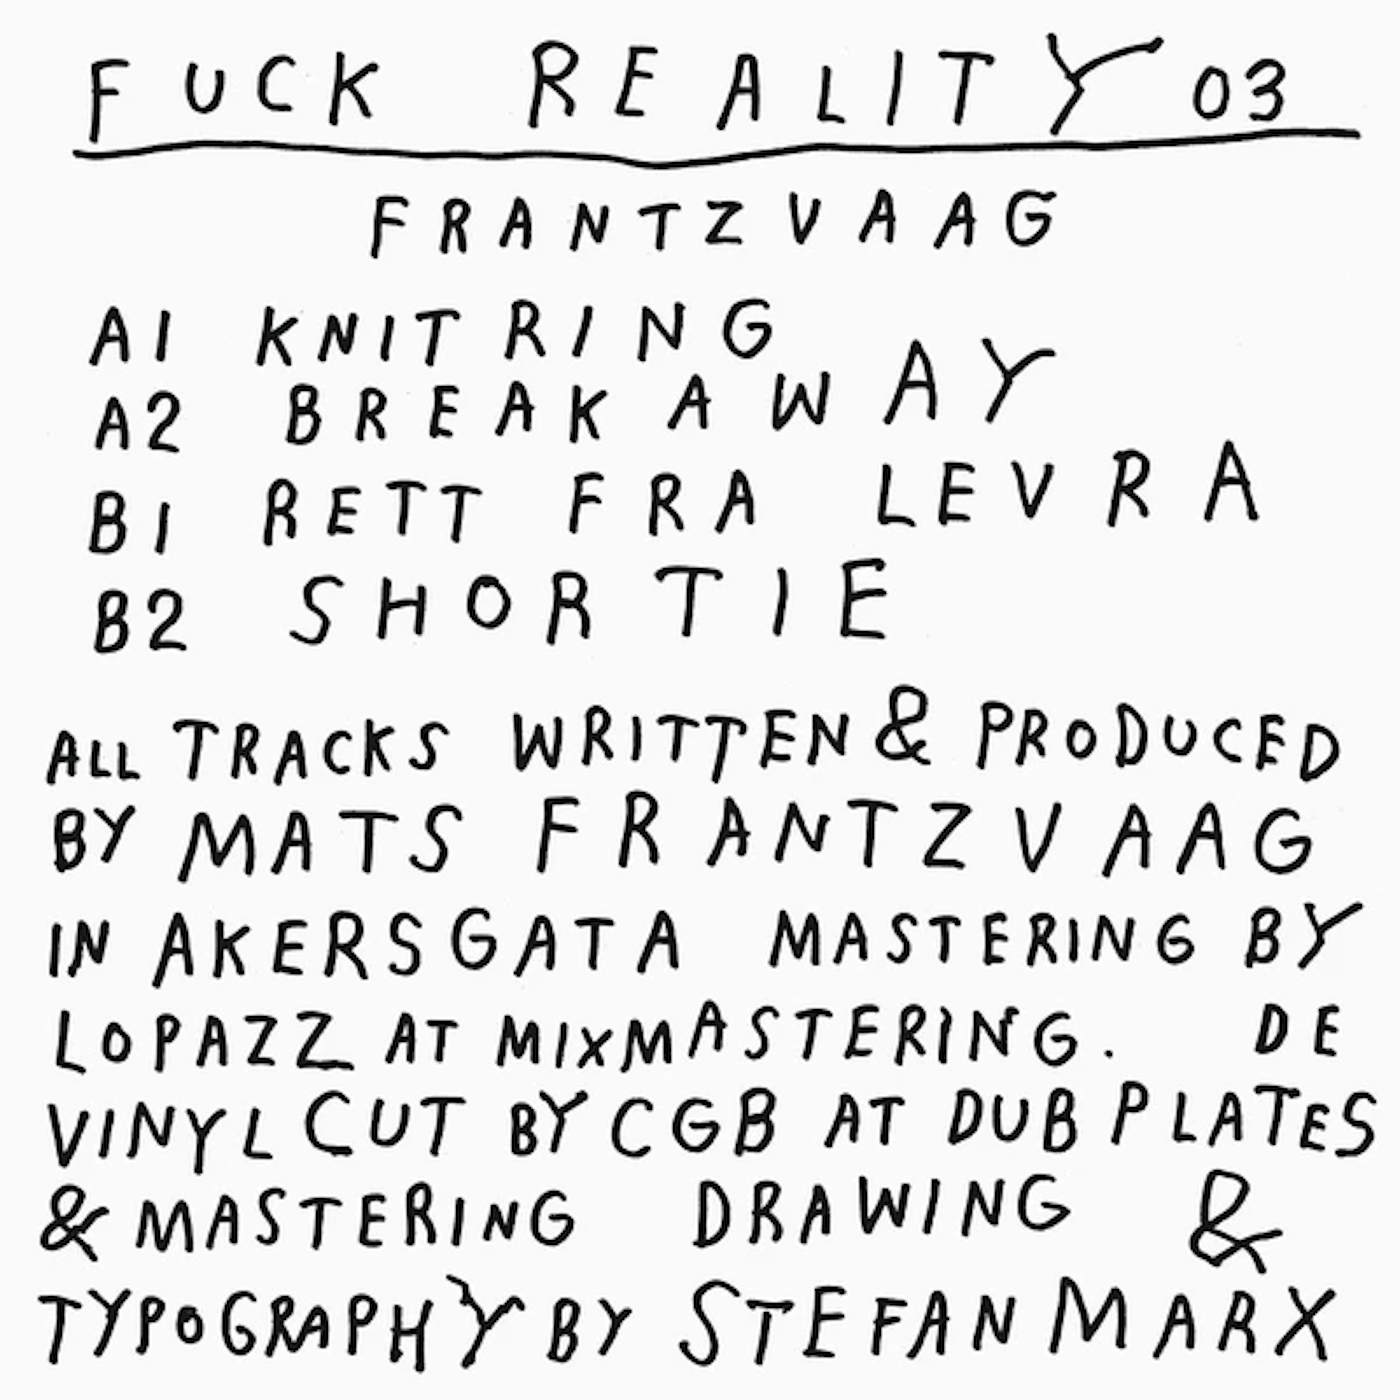 Frantzvaag Fuck Reality 03 Vinyl Record